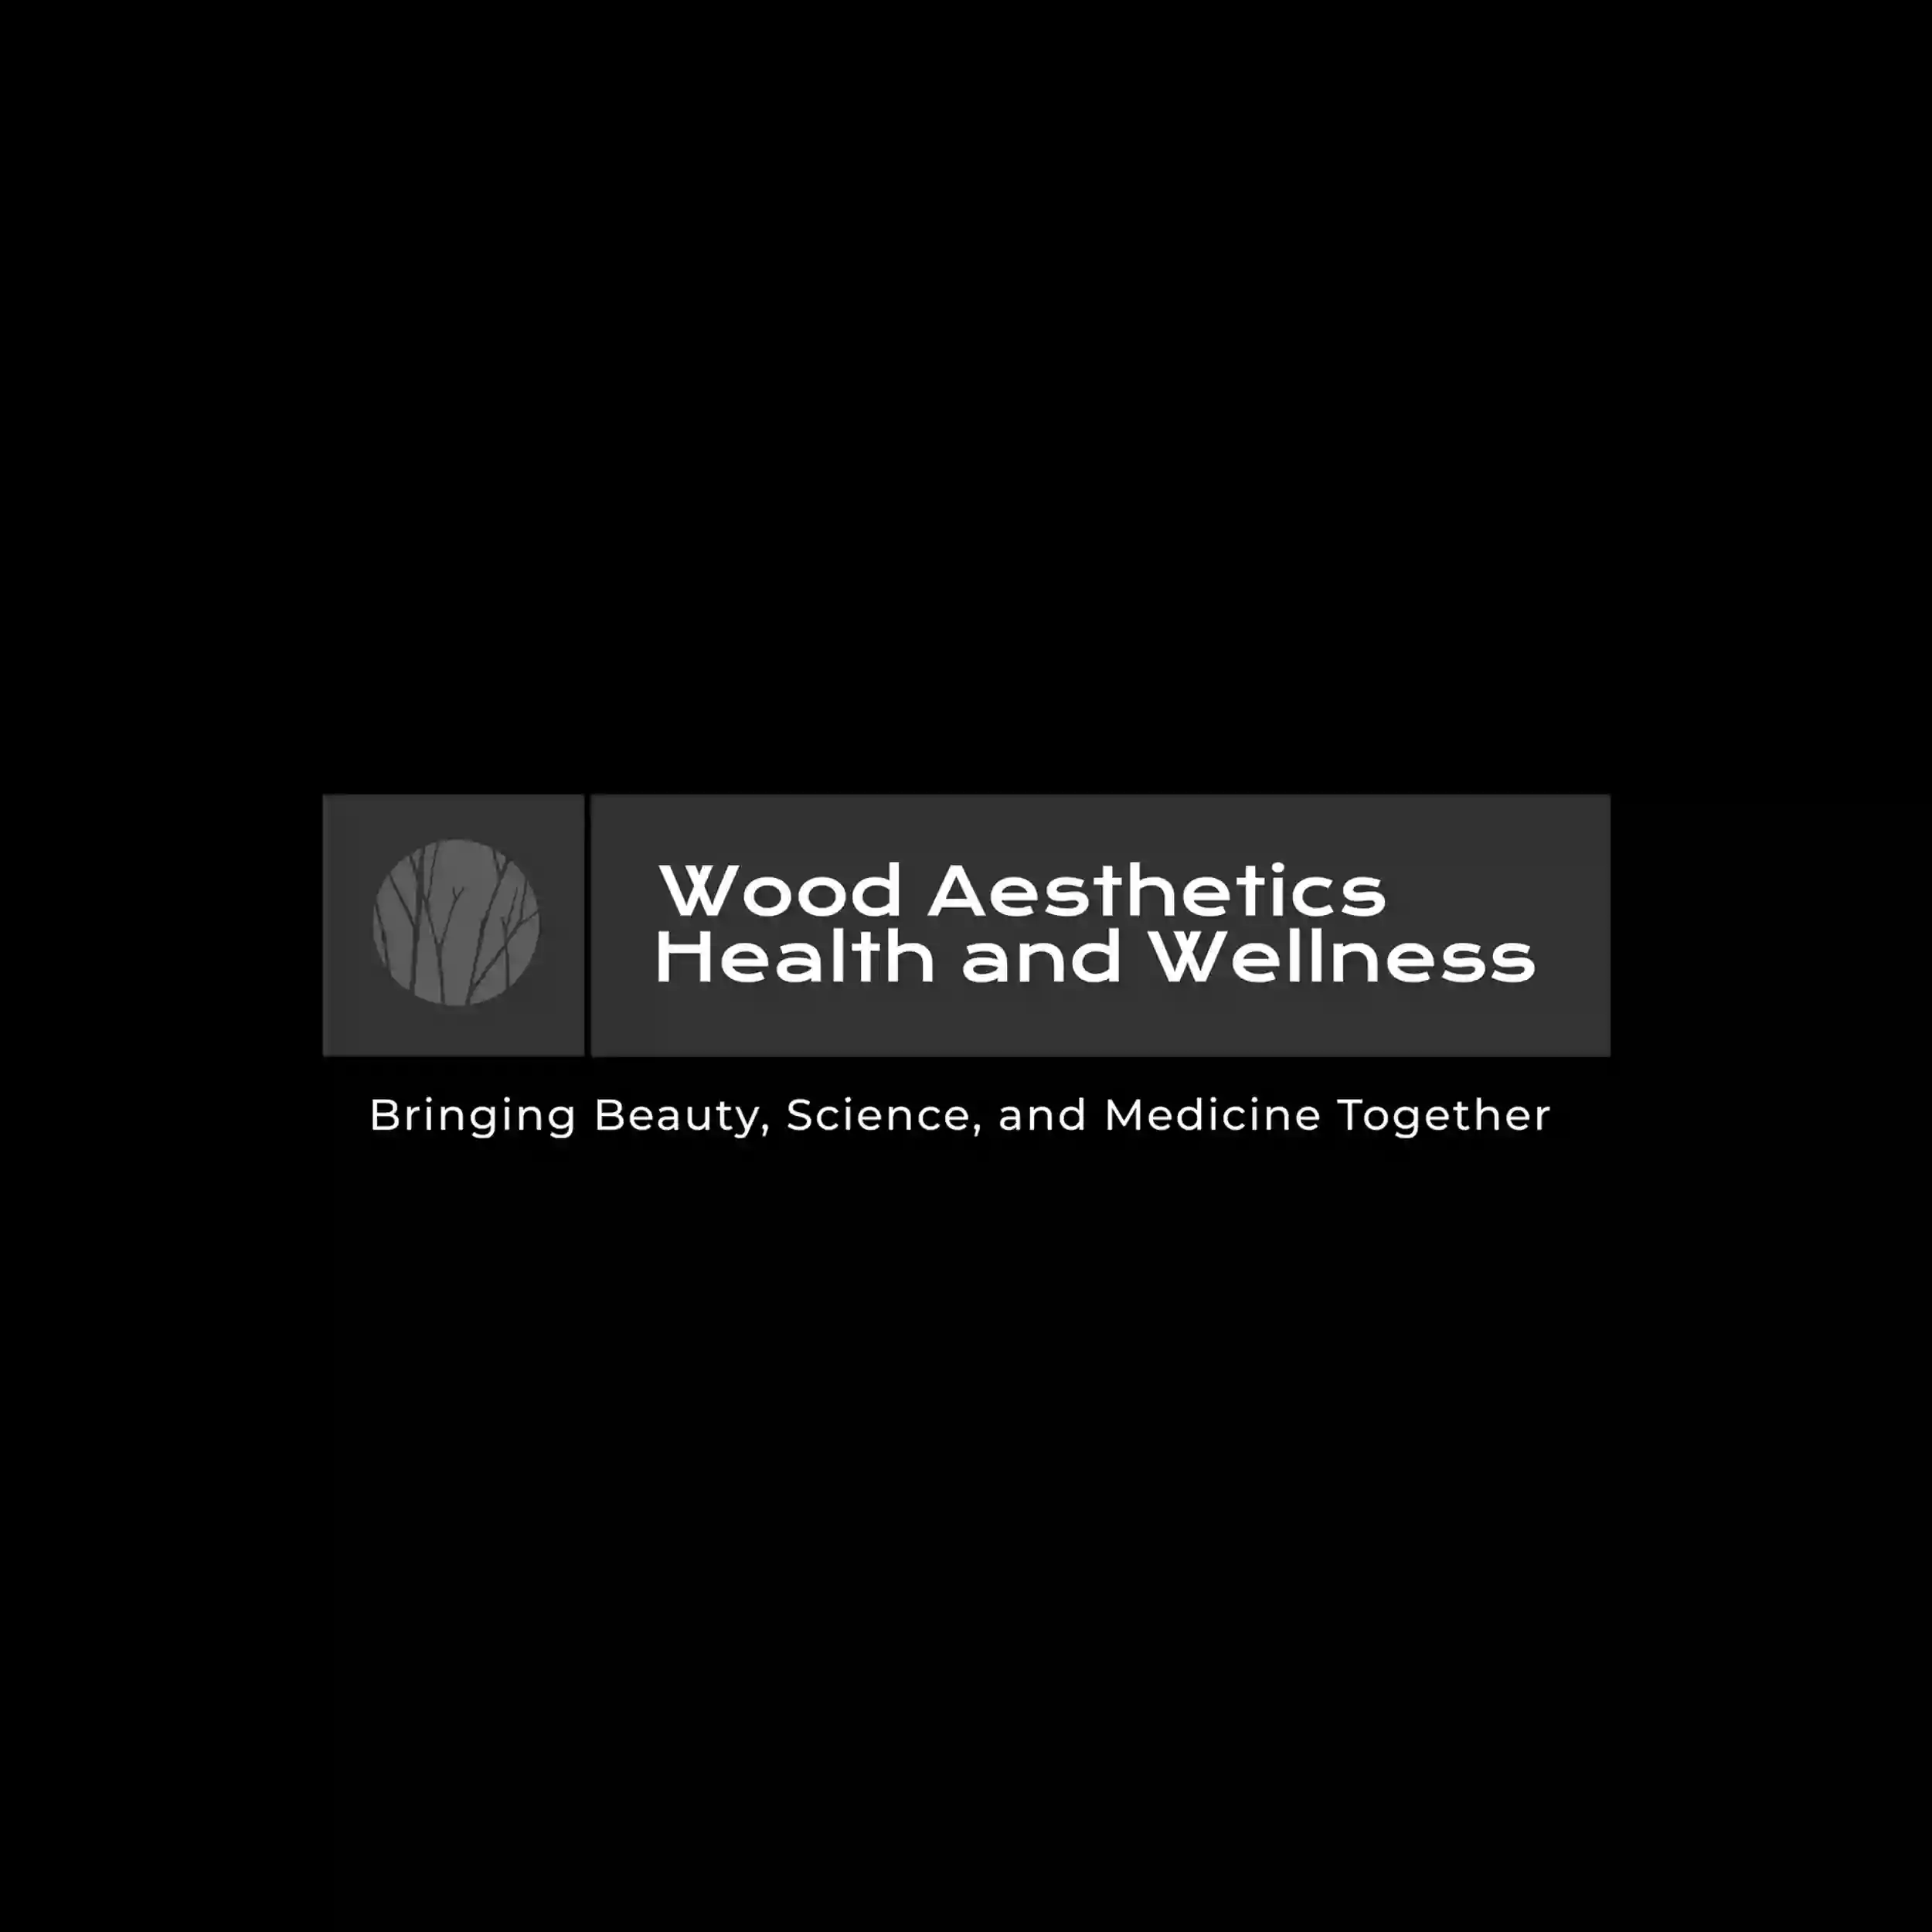 Wood Aesthetics Health and Wellness